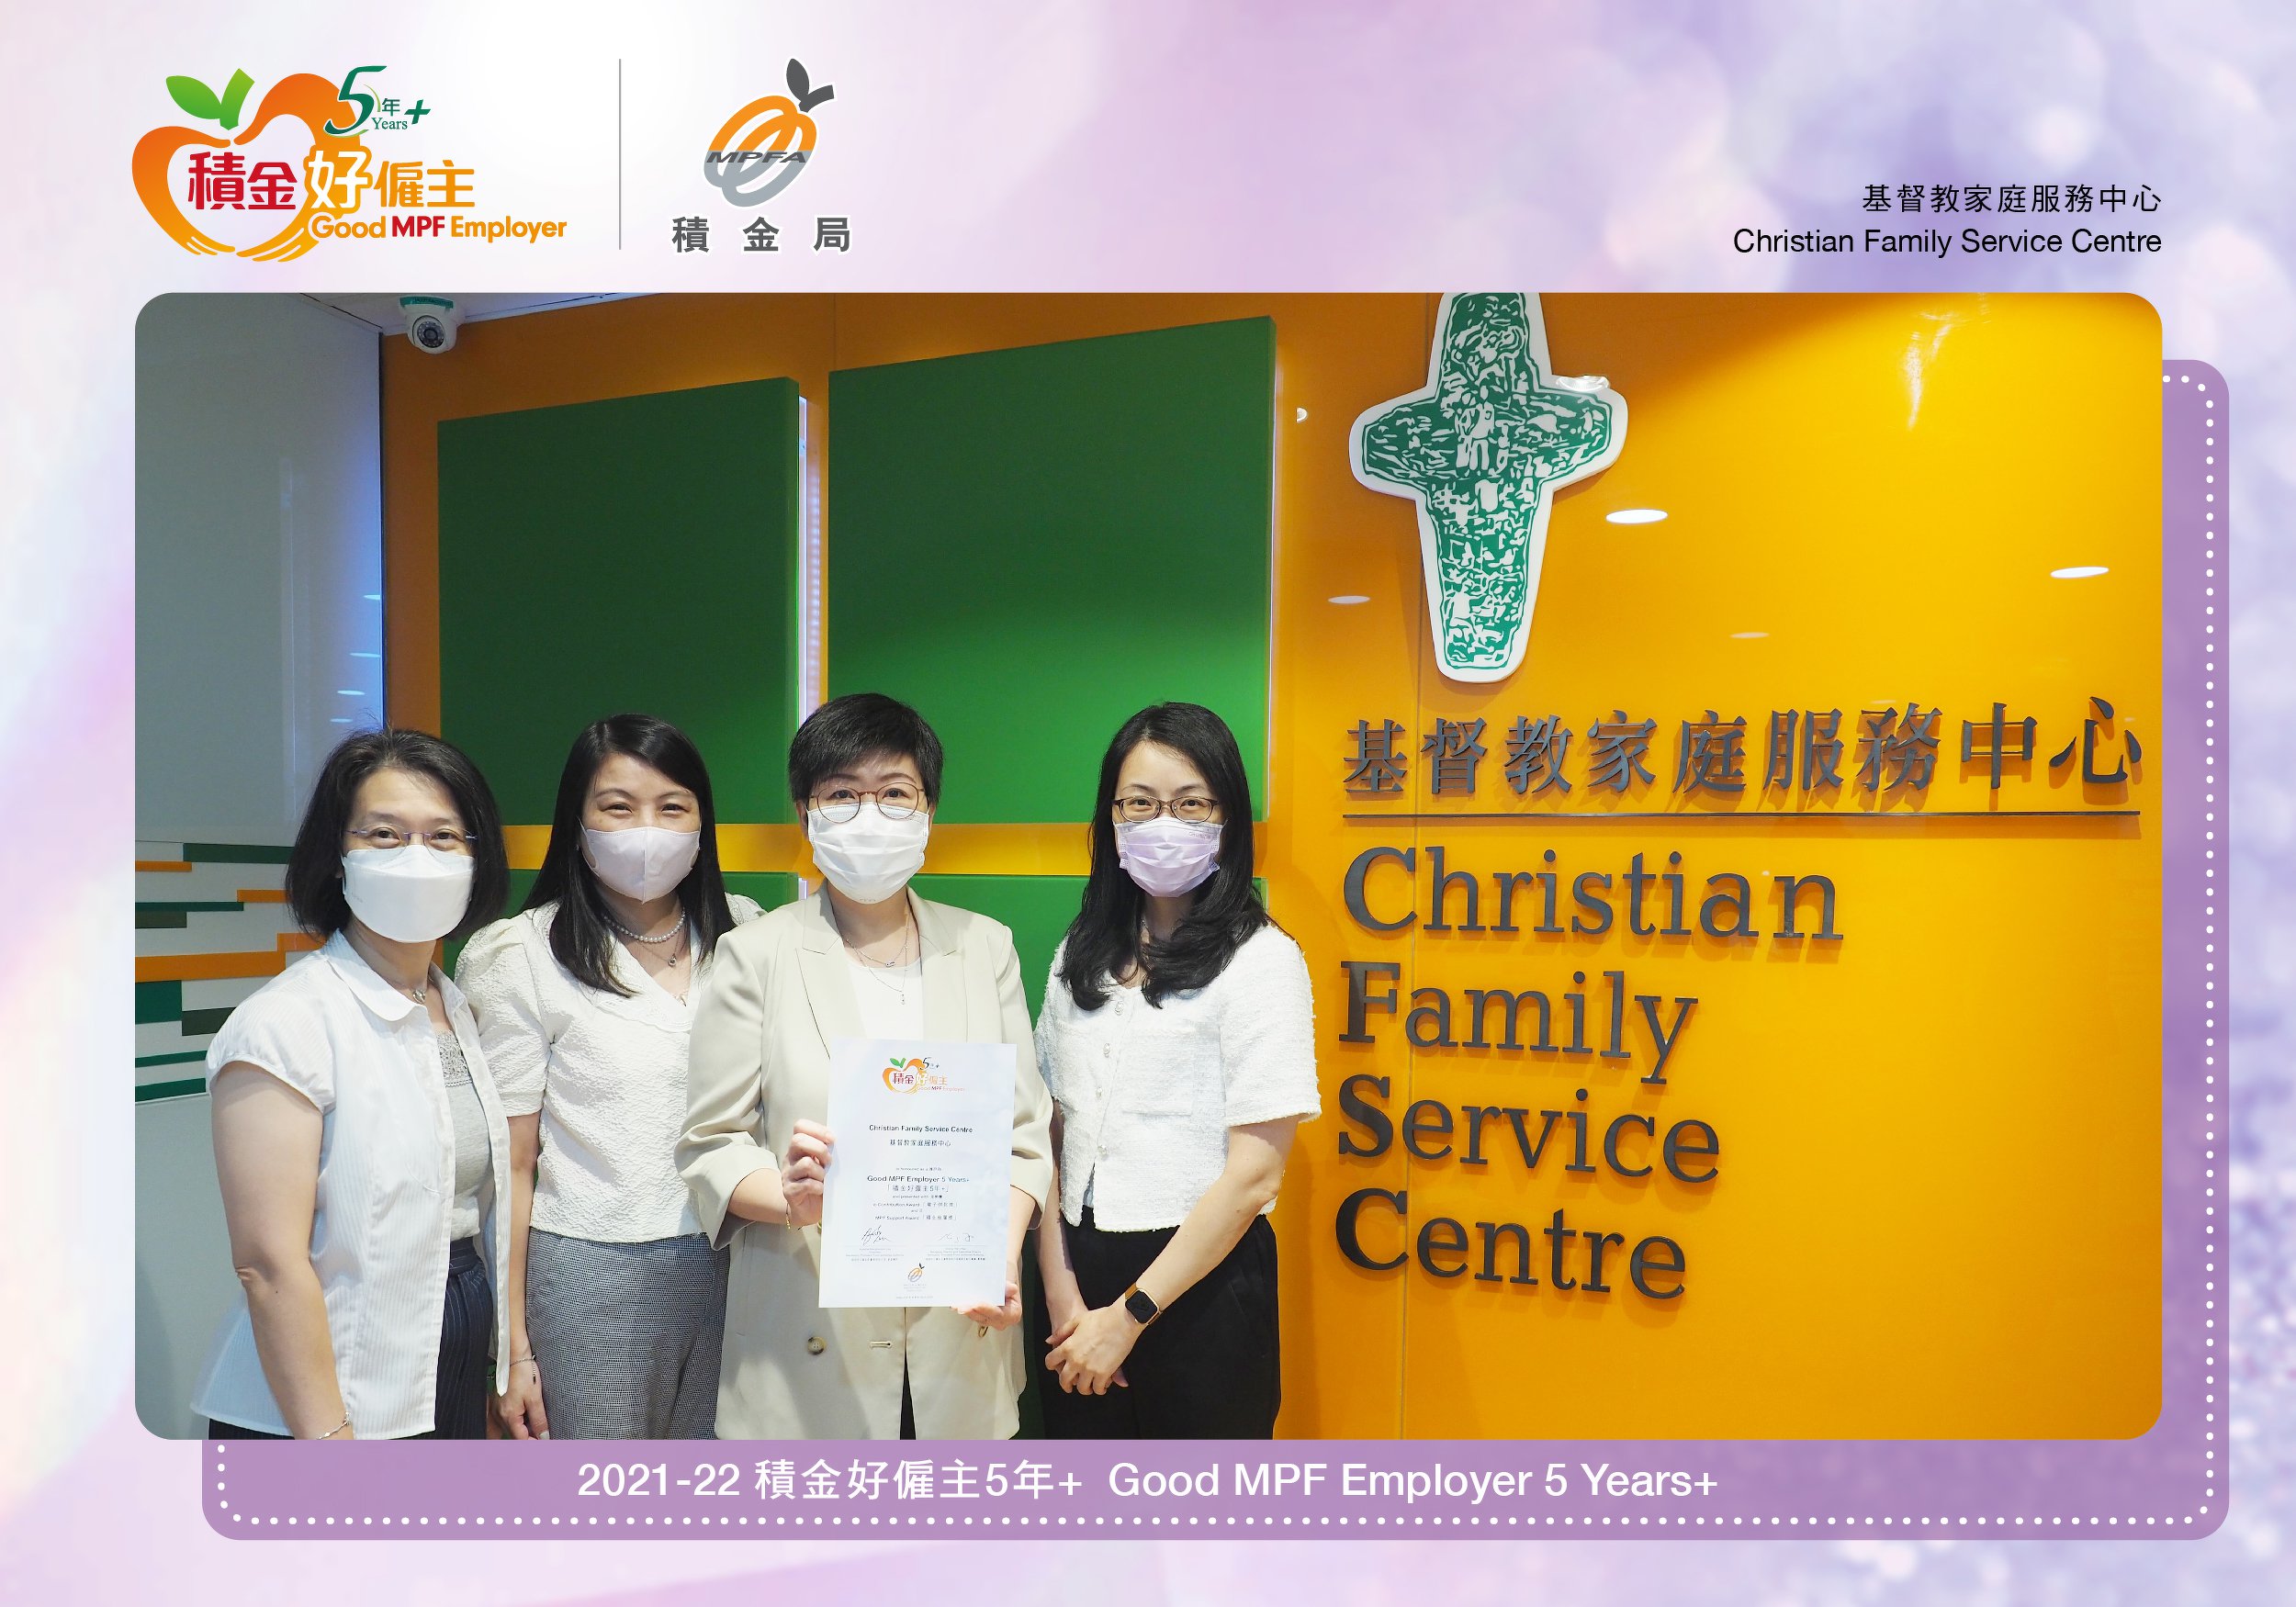 Christian Family Service Centre 基督教家庭服務中心